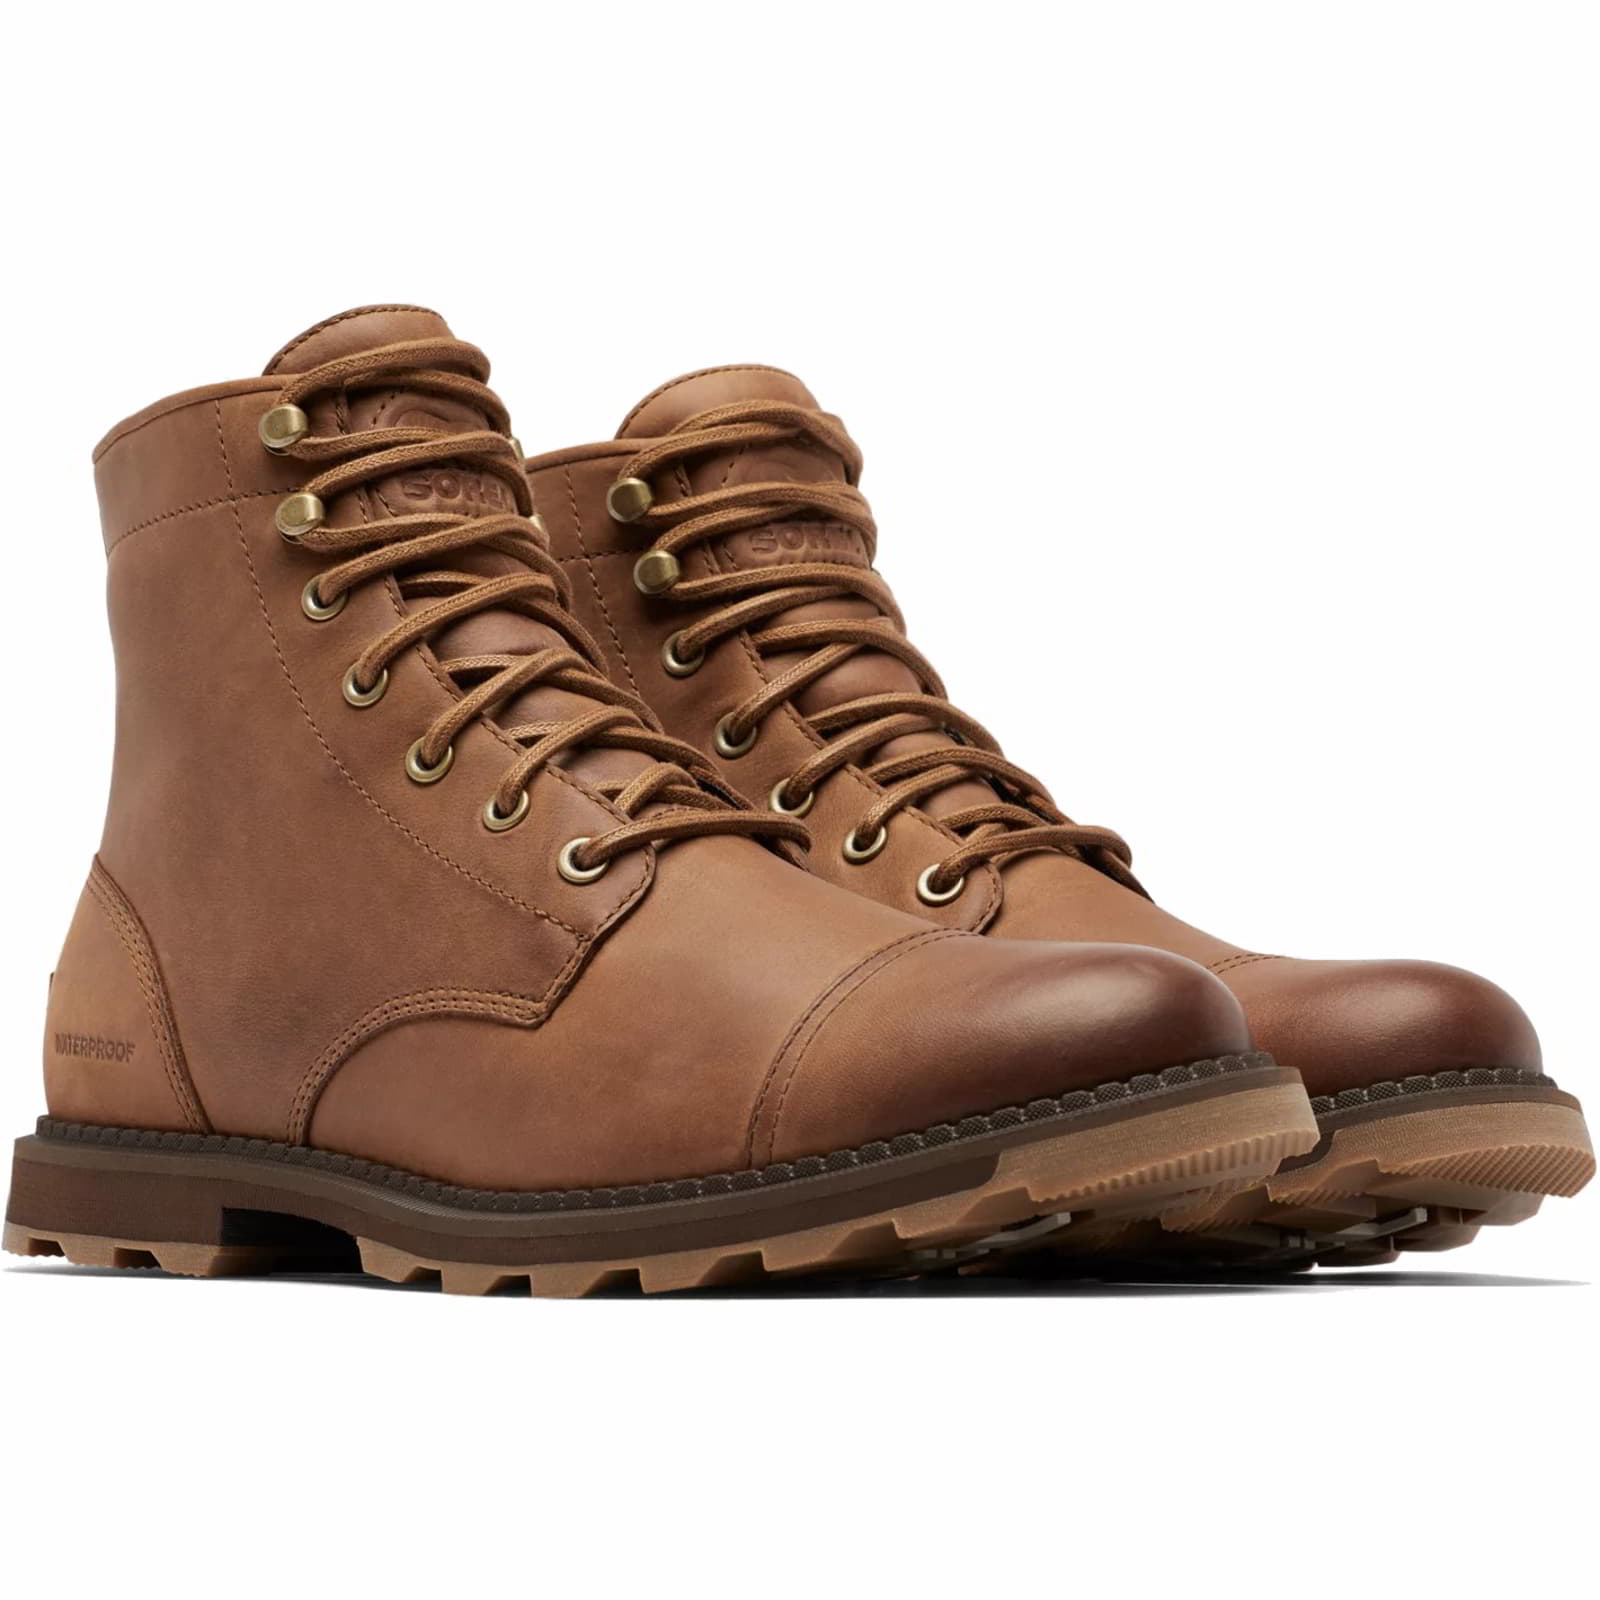 Sorel Men's Madson II Chore Waterproof Ankle Boots - UK 12 / US 13